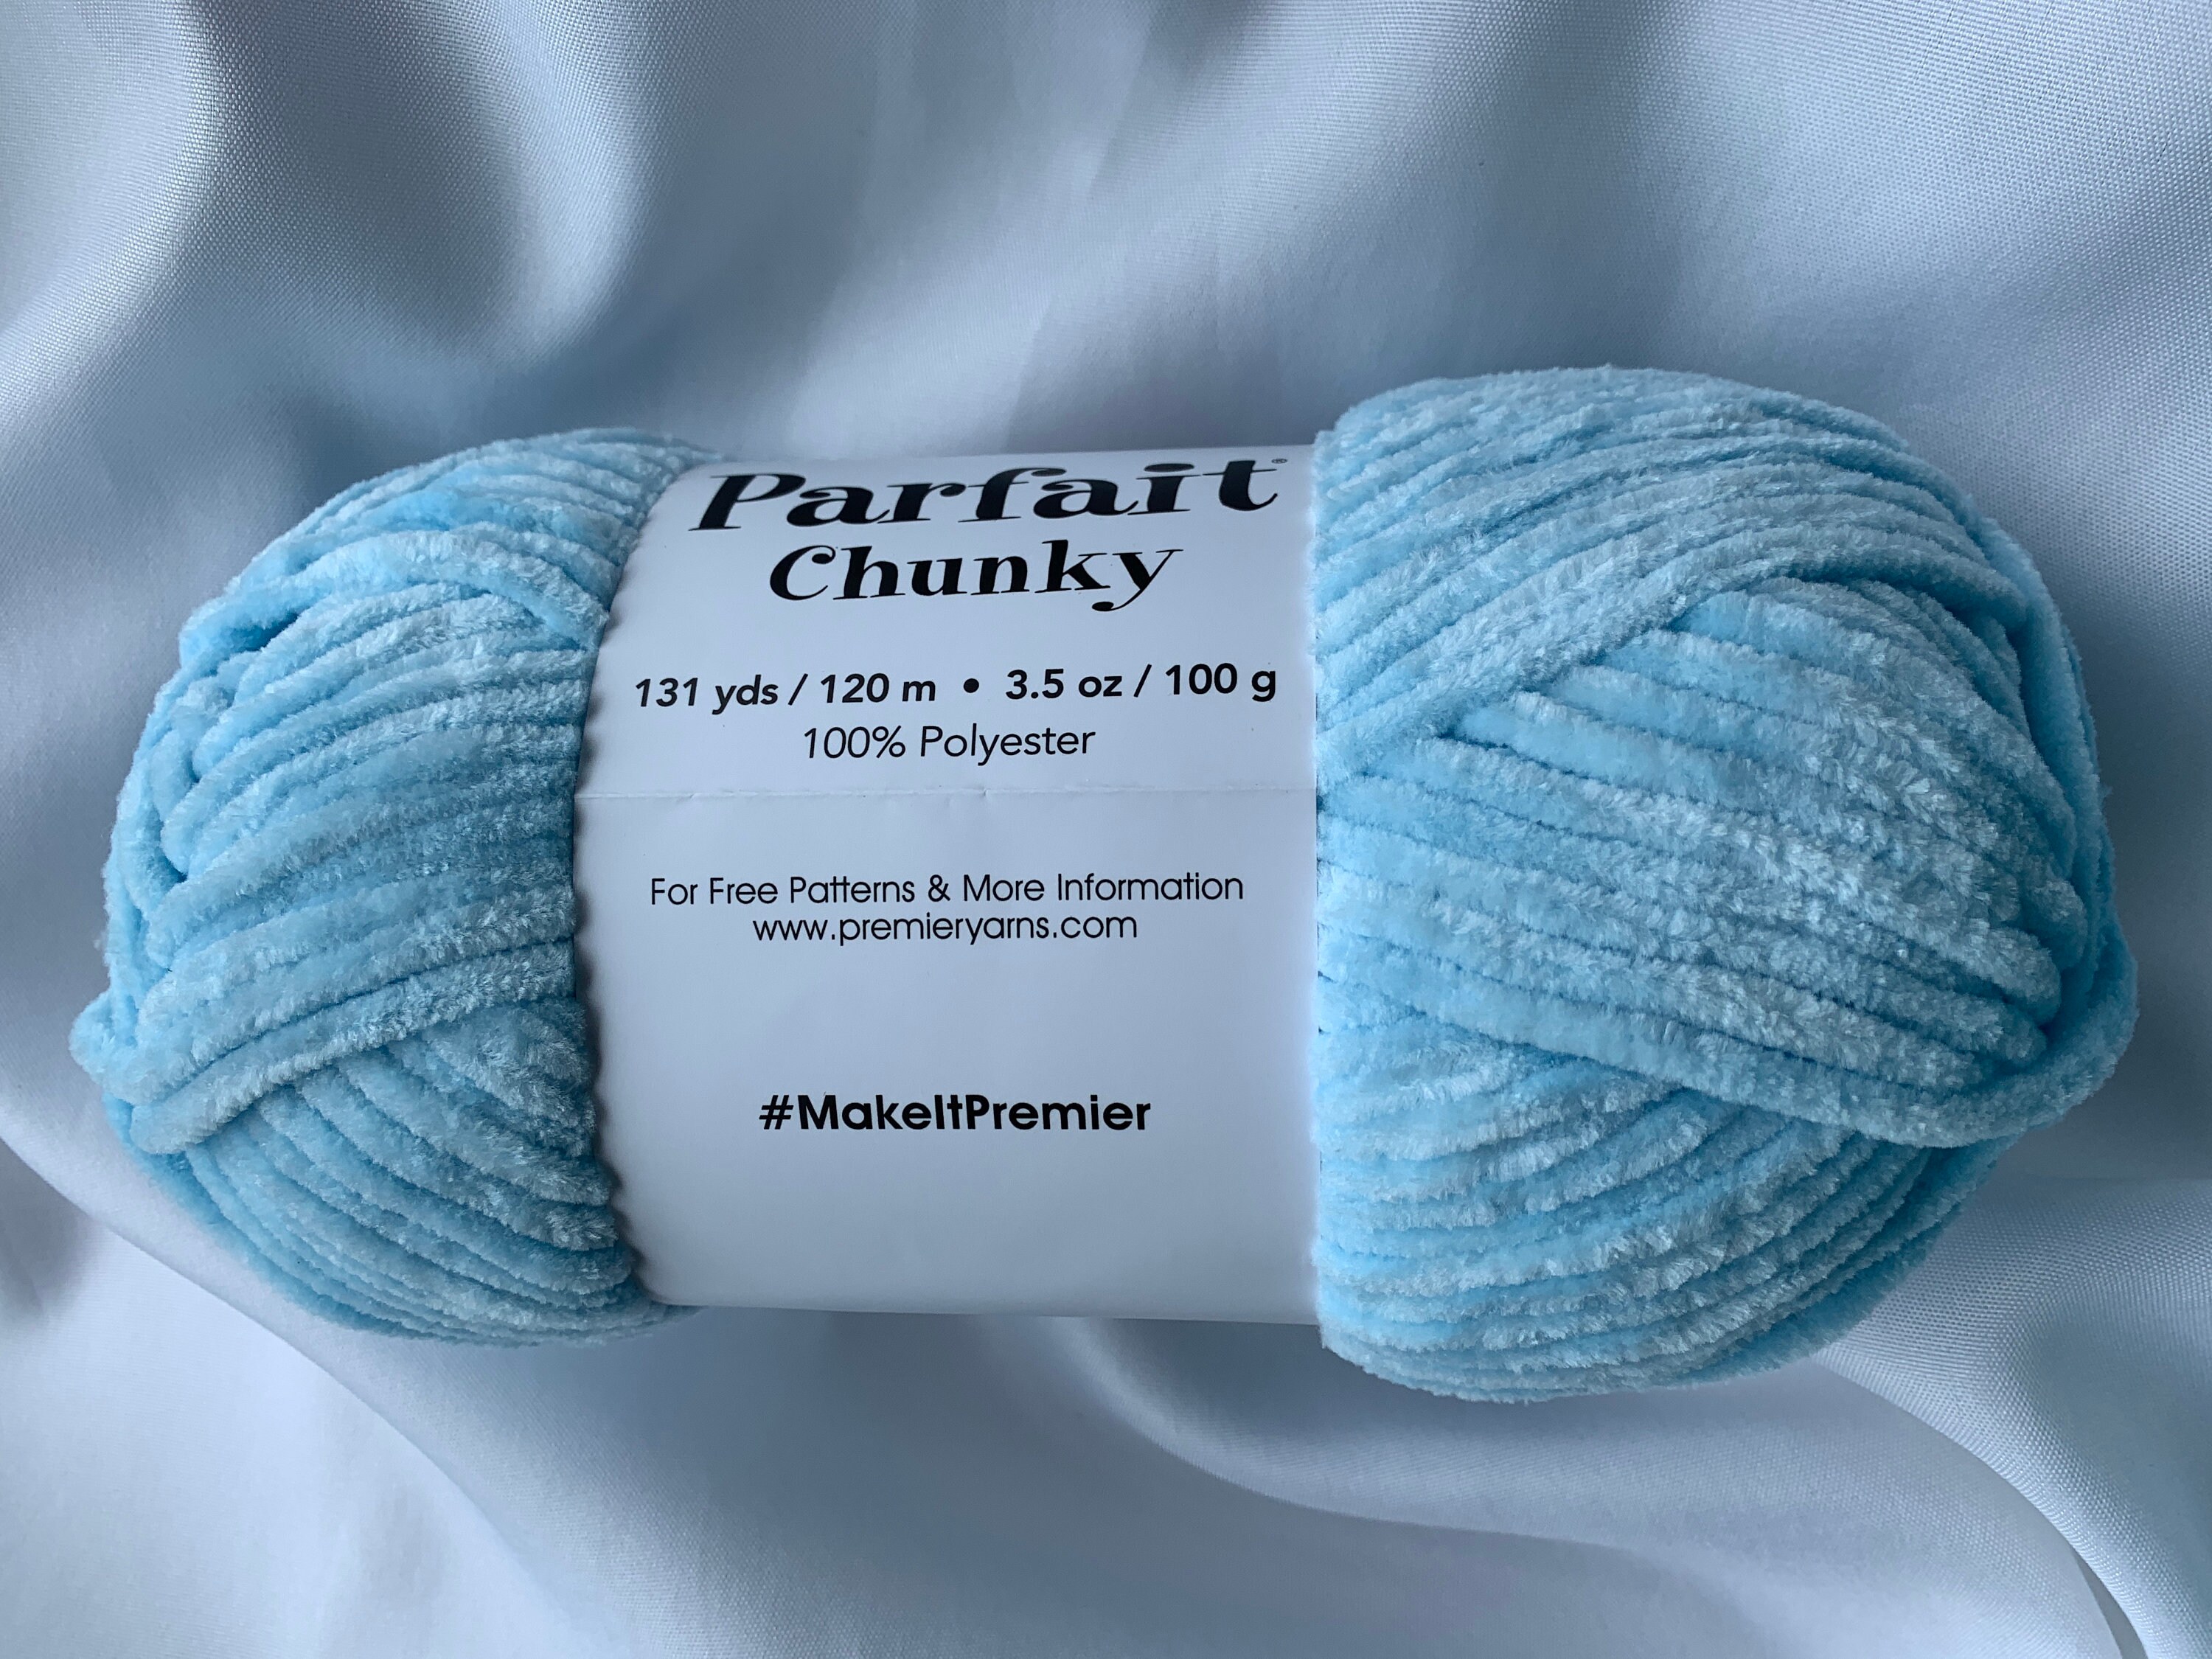 Premier Parfait Chunky Light Blue 1150-05 131 Yds 3.5 Oz. Super Bulky 6 Wt  Light Blue Chenille Yarn 100% Polyester Dcoyshouseofyarn 